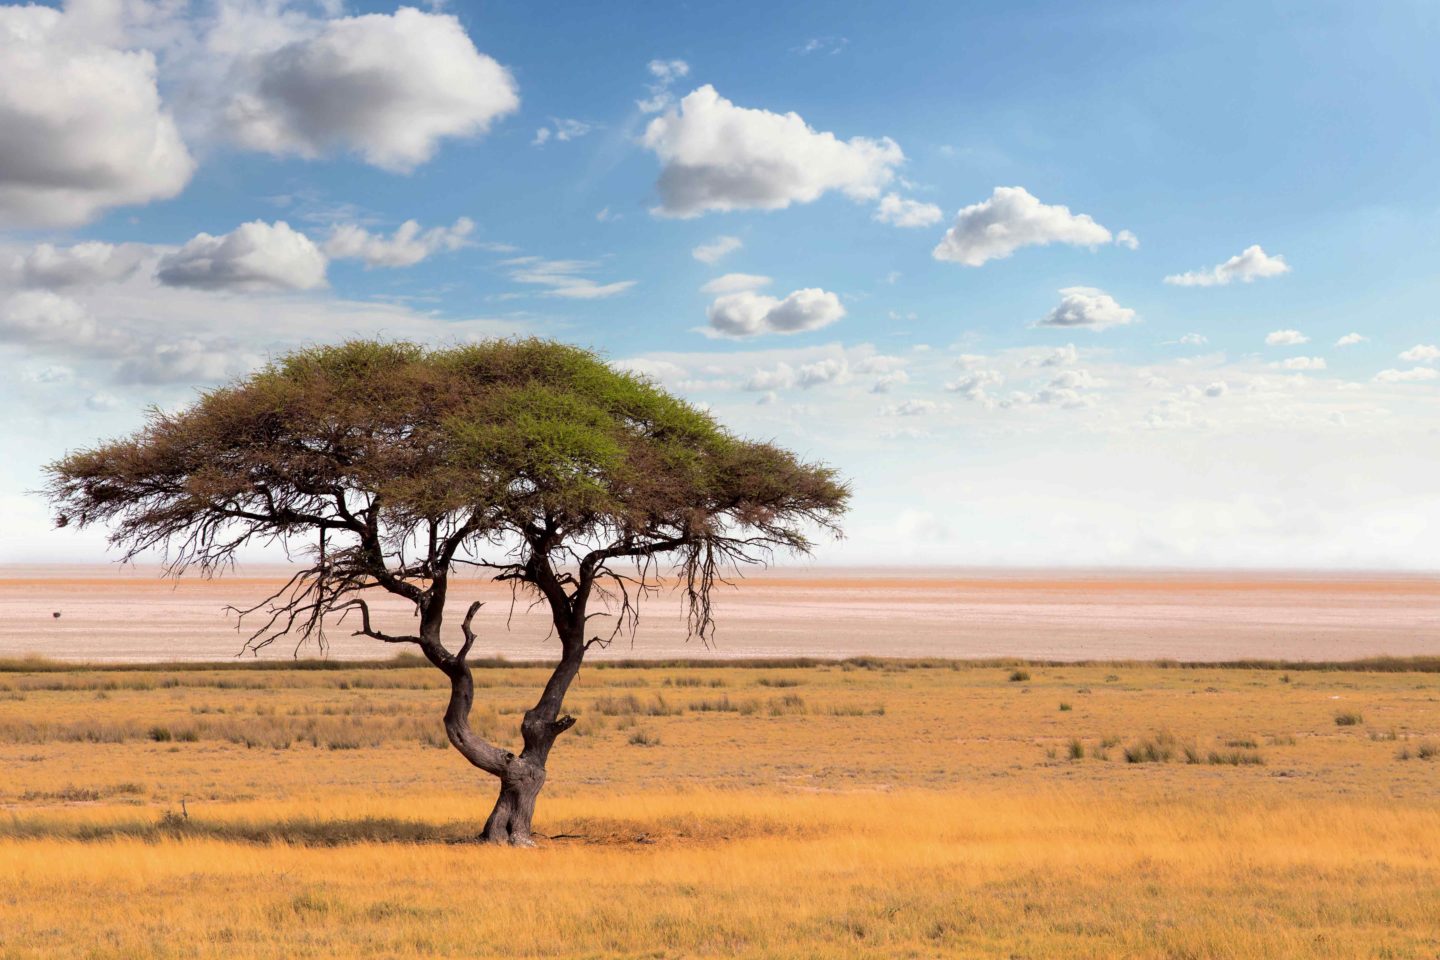 Acacia tree gracing the open savannah plains of East Africa, Botswana's Hwange.